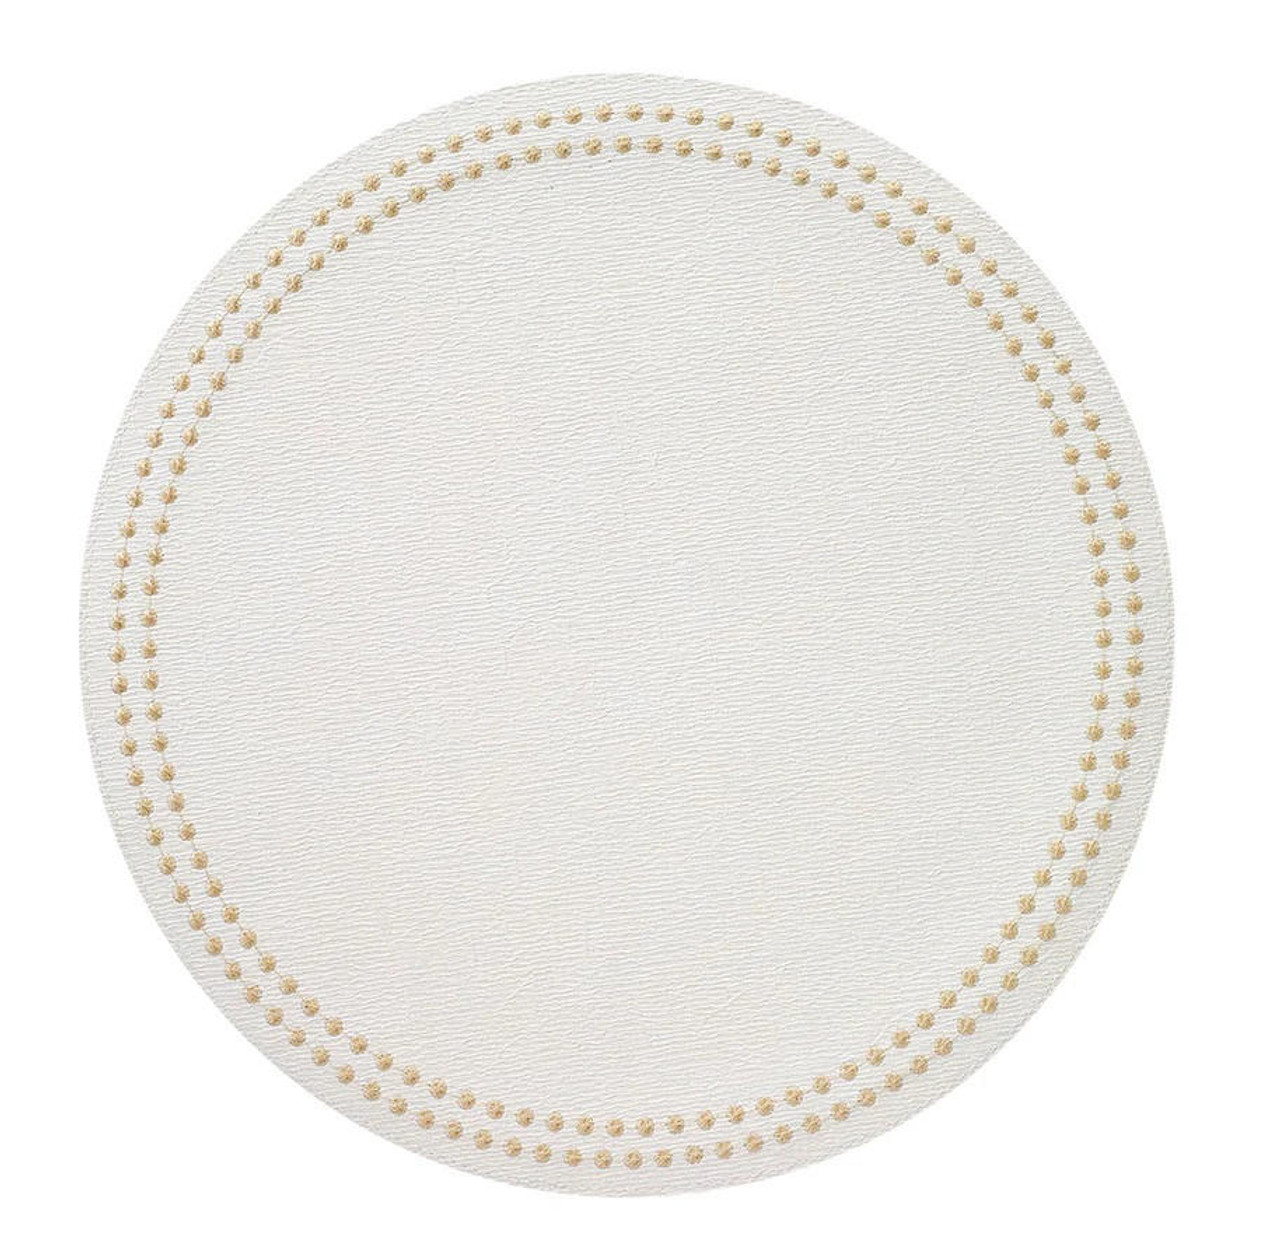 Bodrum Linens Pearls - Linen Napkins - Set of 4 - Silver